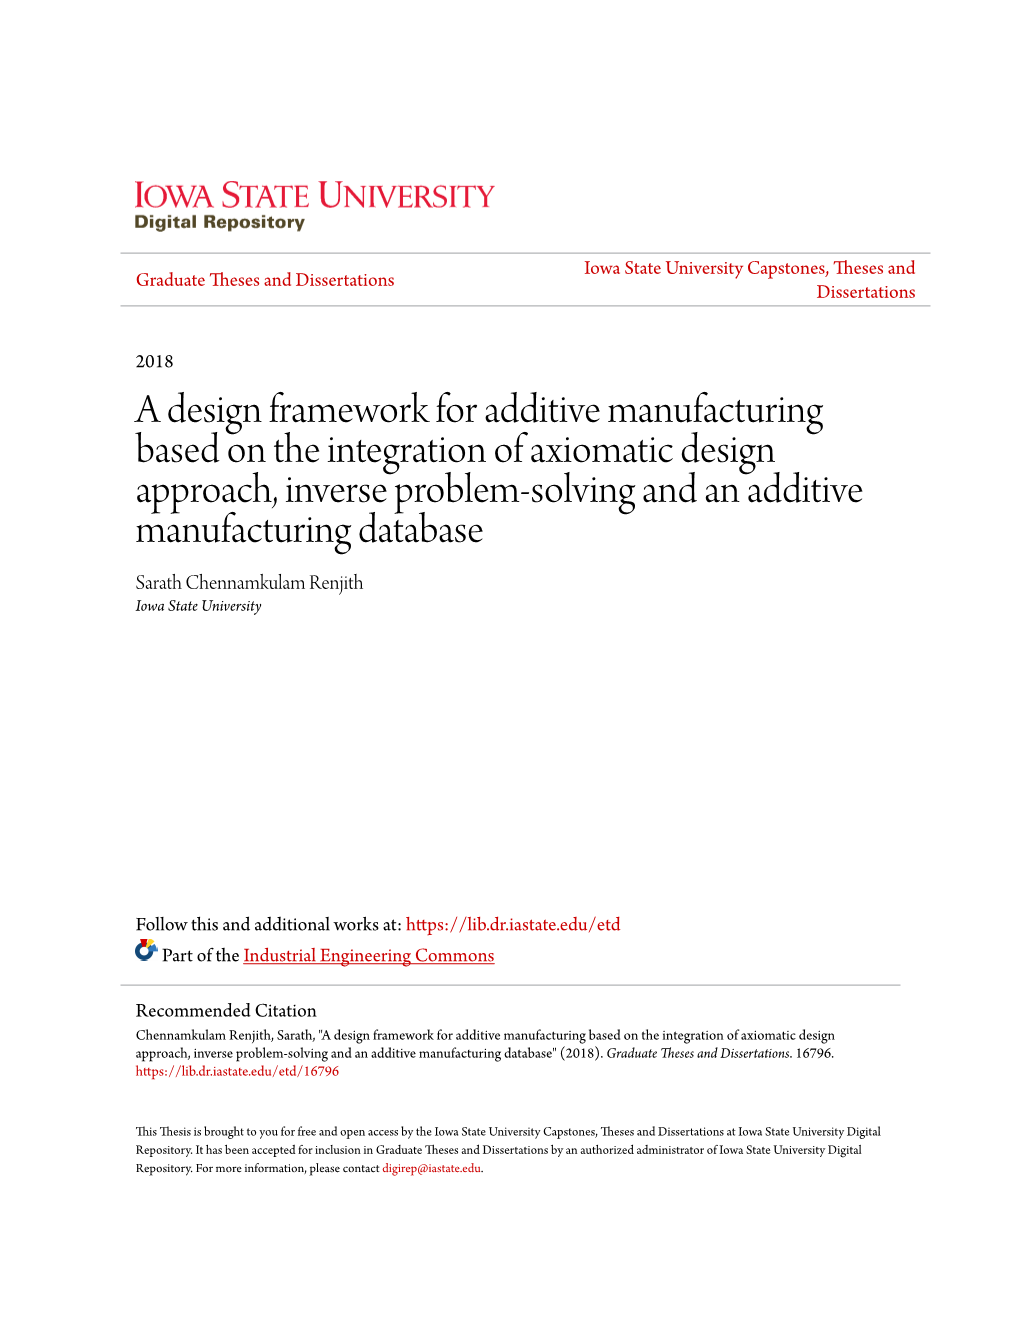 A Design Framework for Additive Manufacturing Based on The